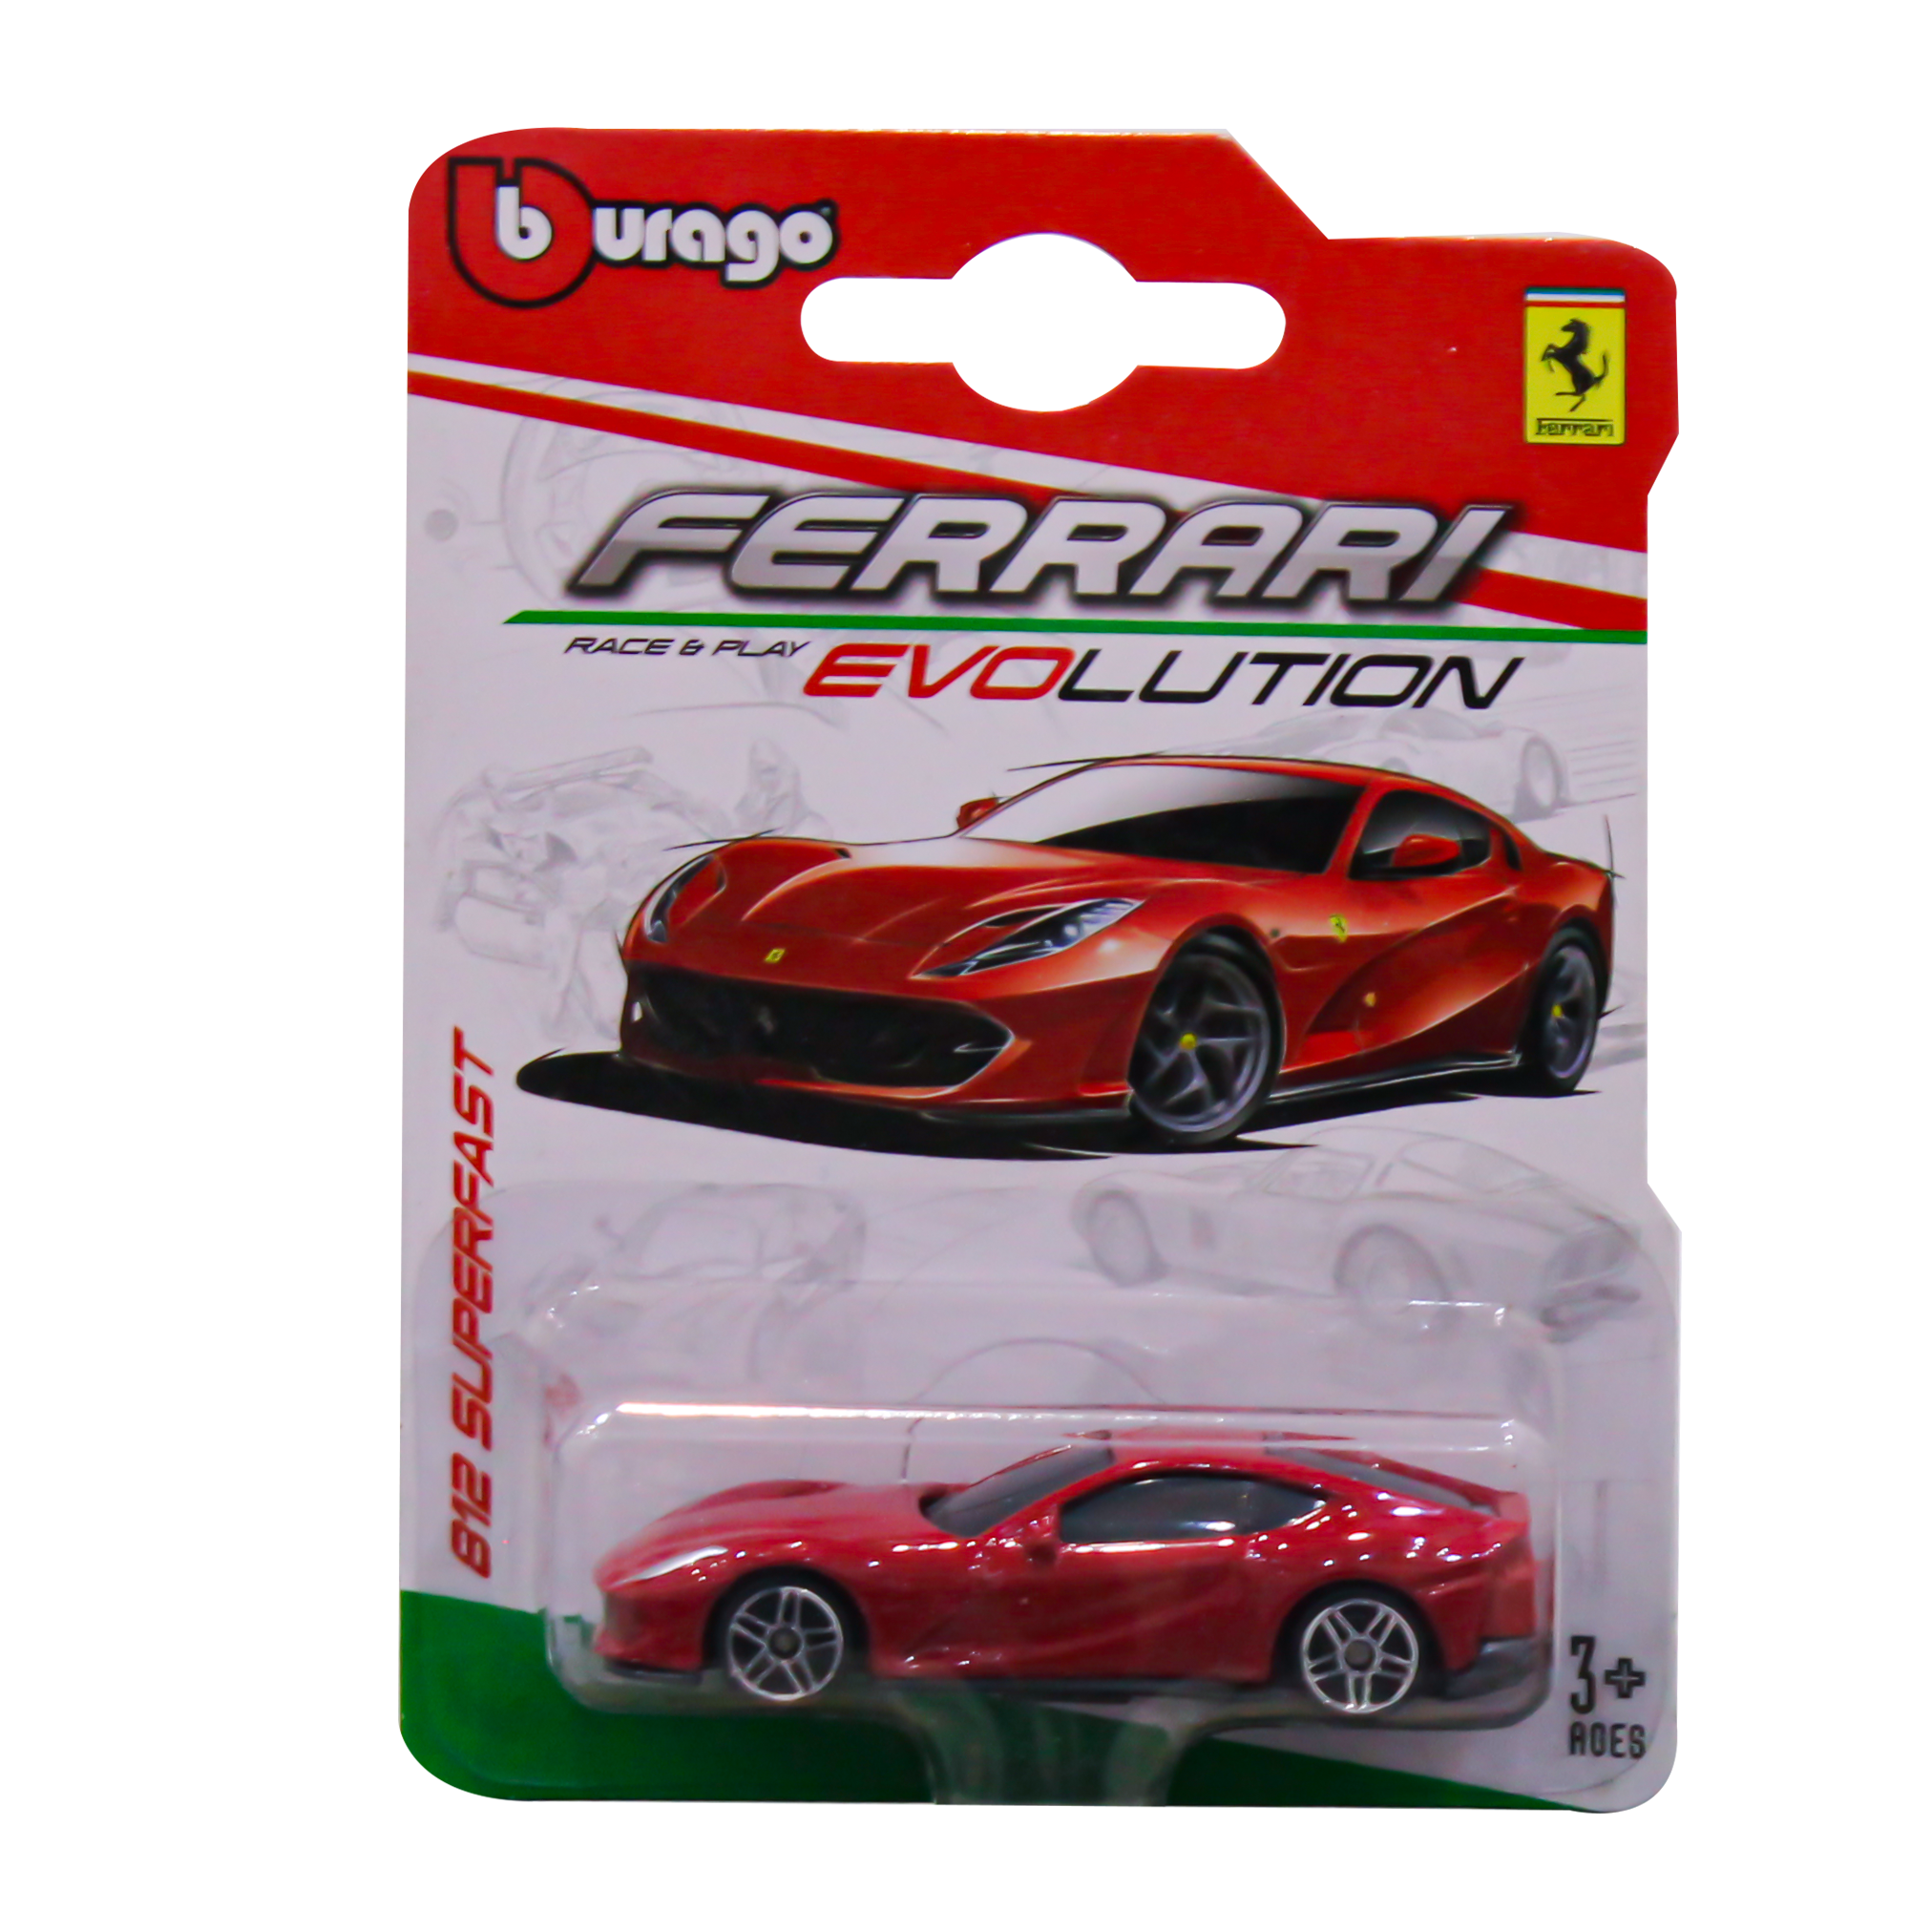 Burago Ferrari Evalution Race & Play Car - 812 Superfast